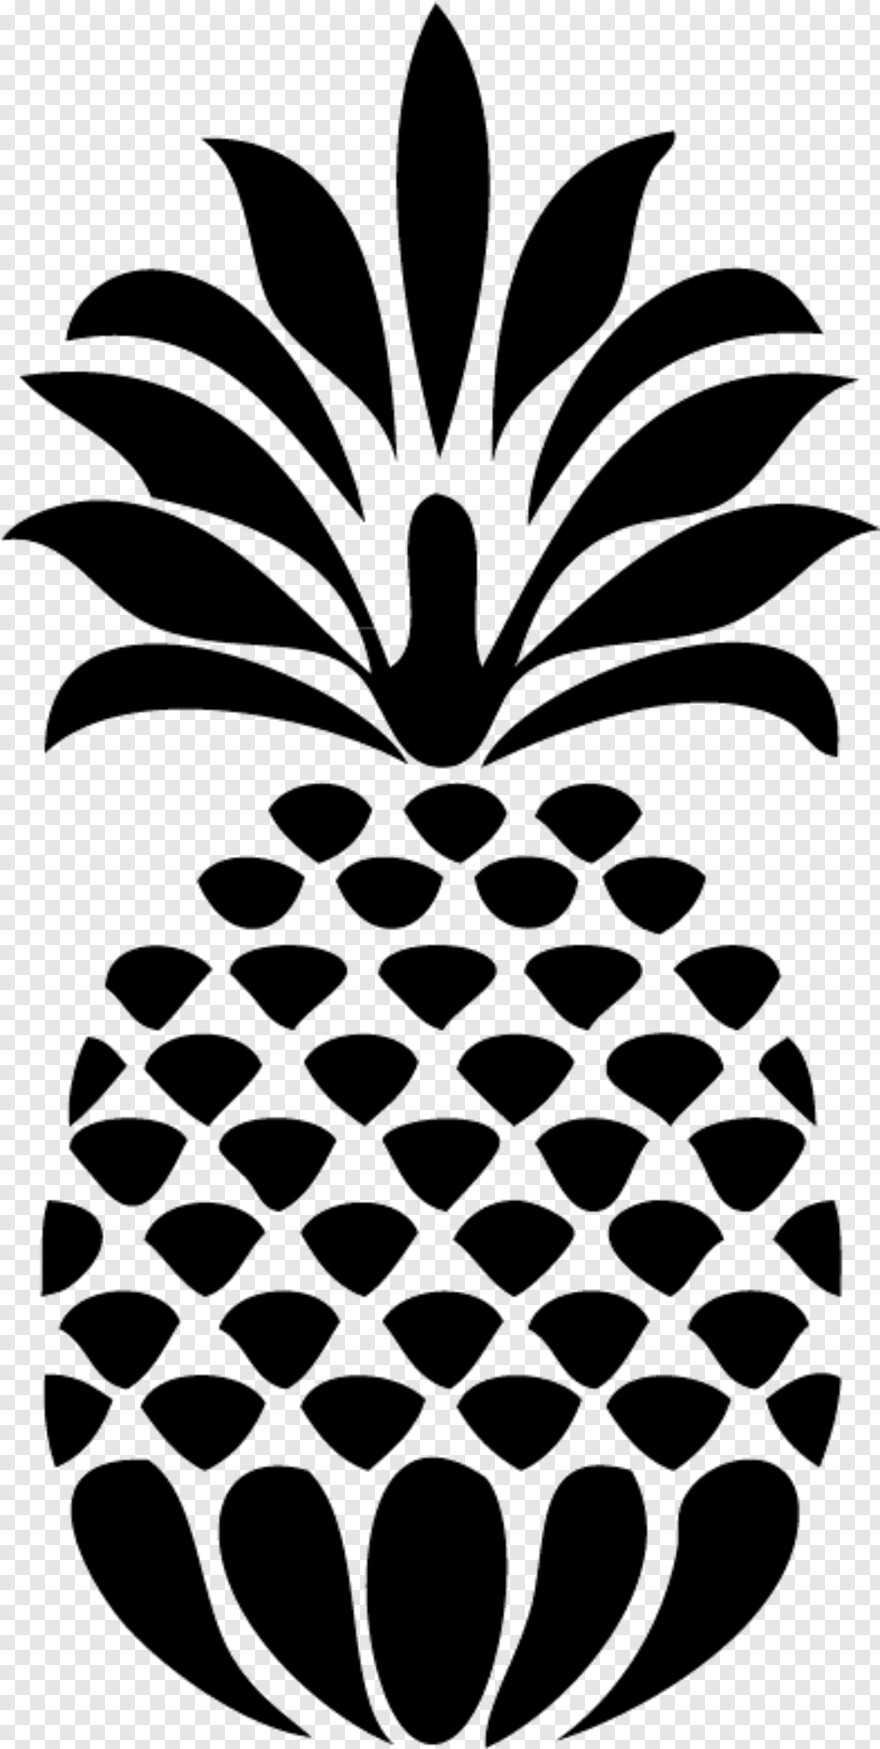 pineapple # 1076513